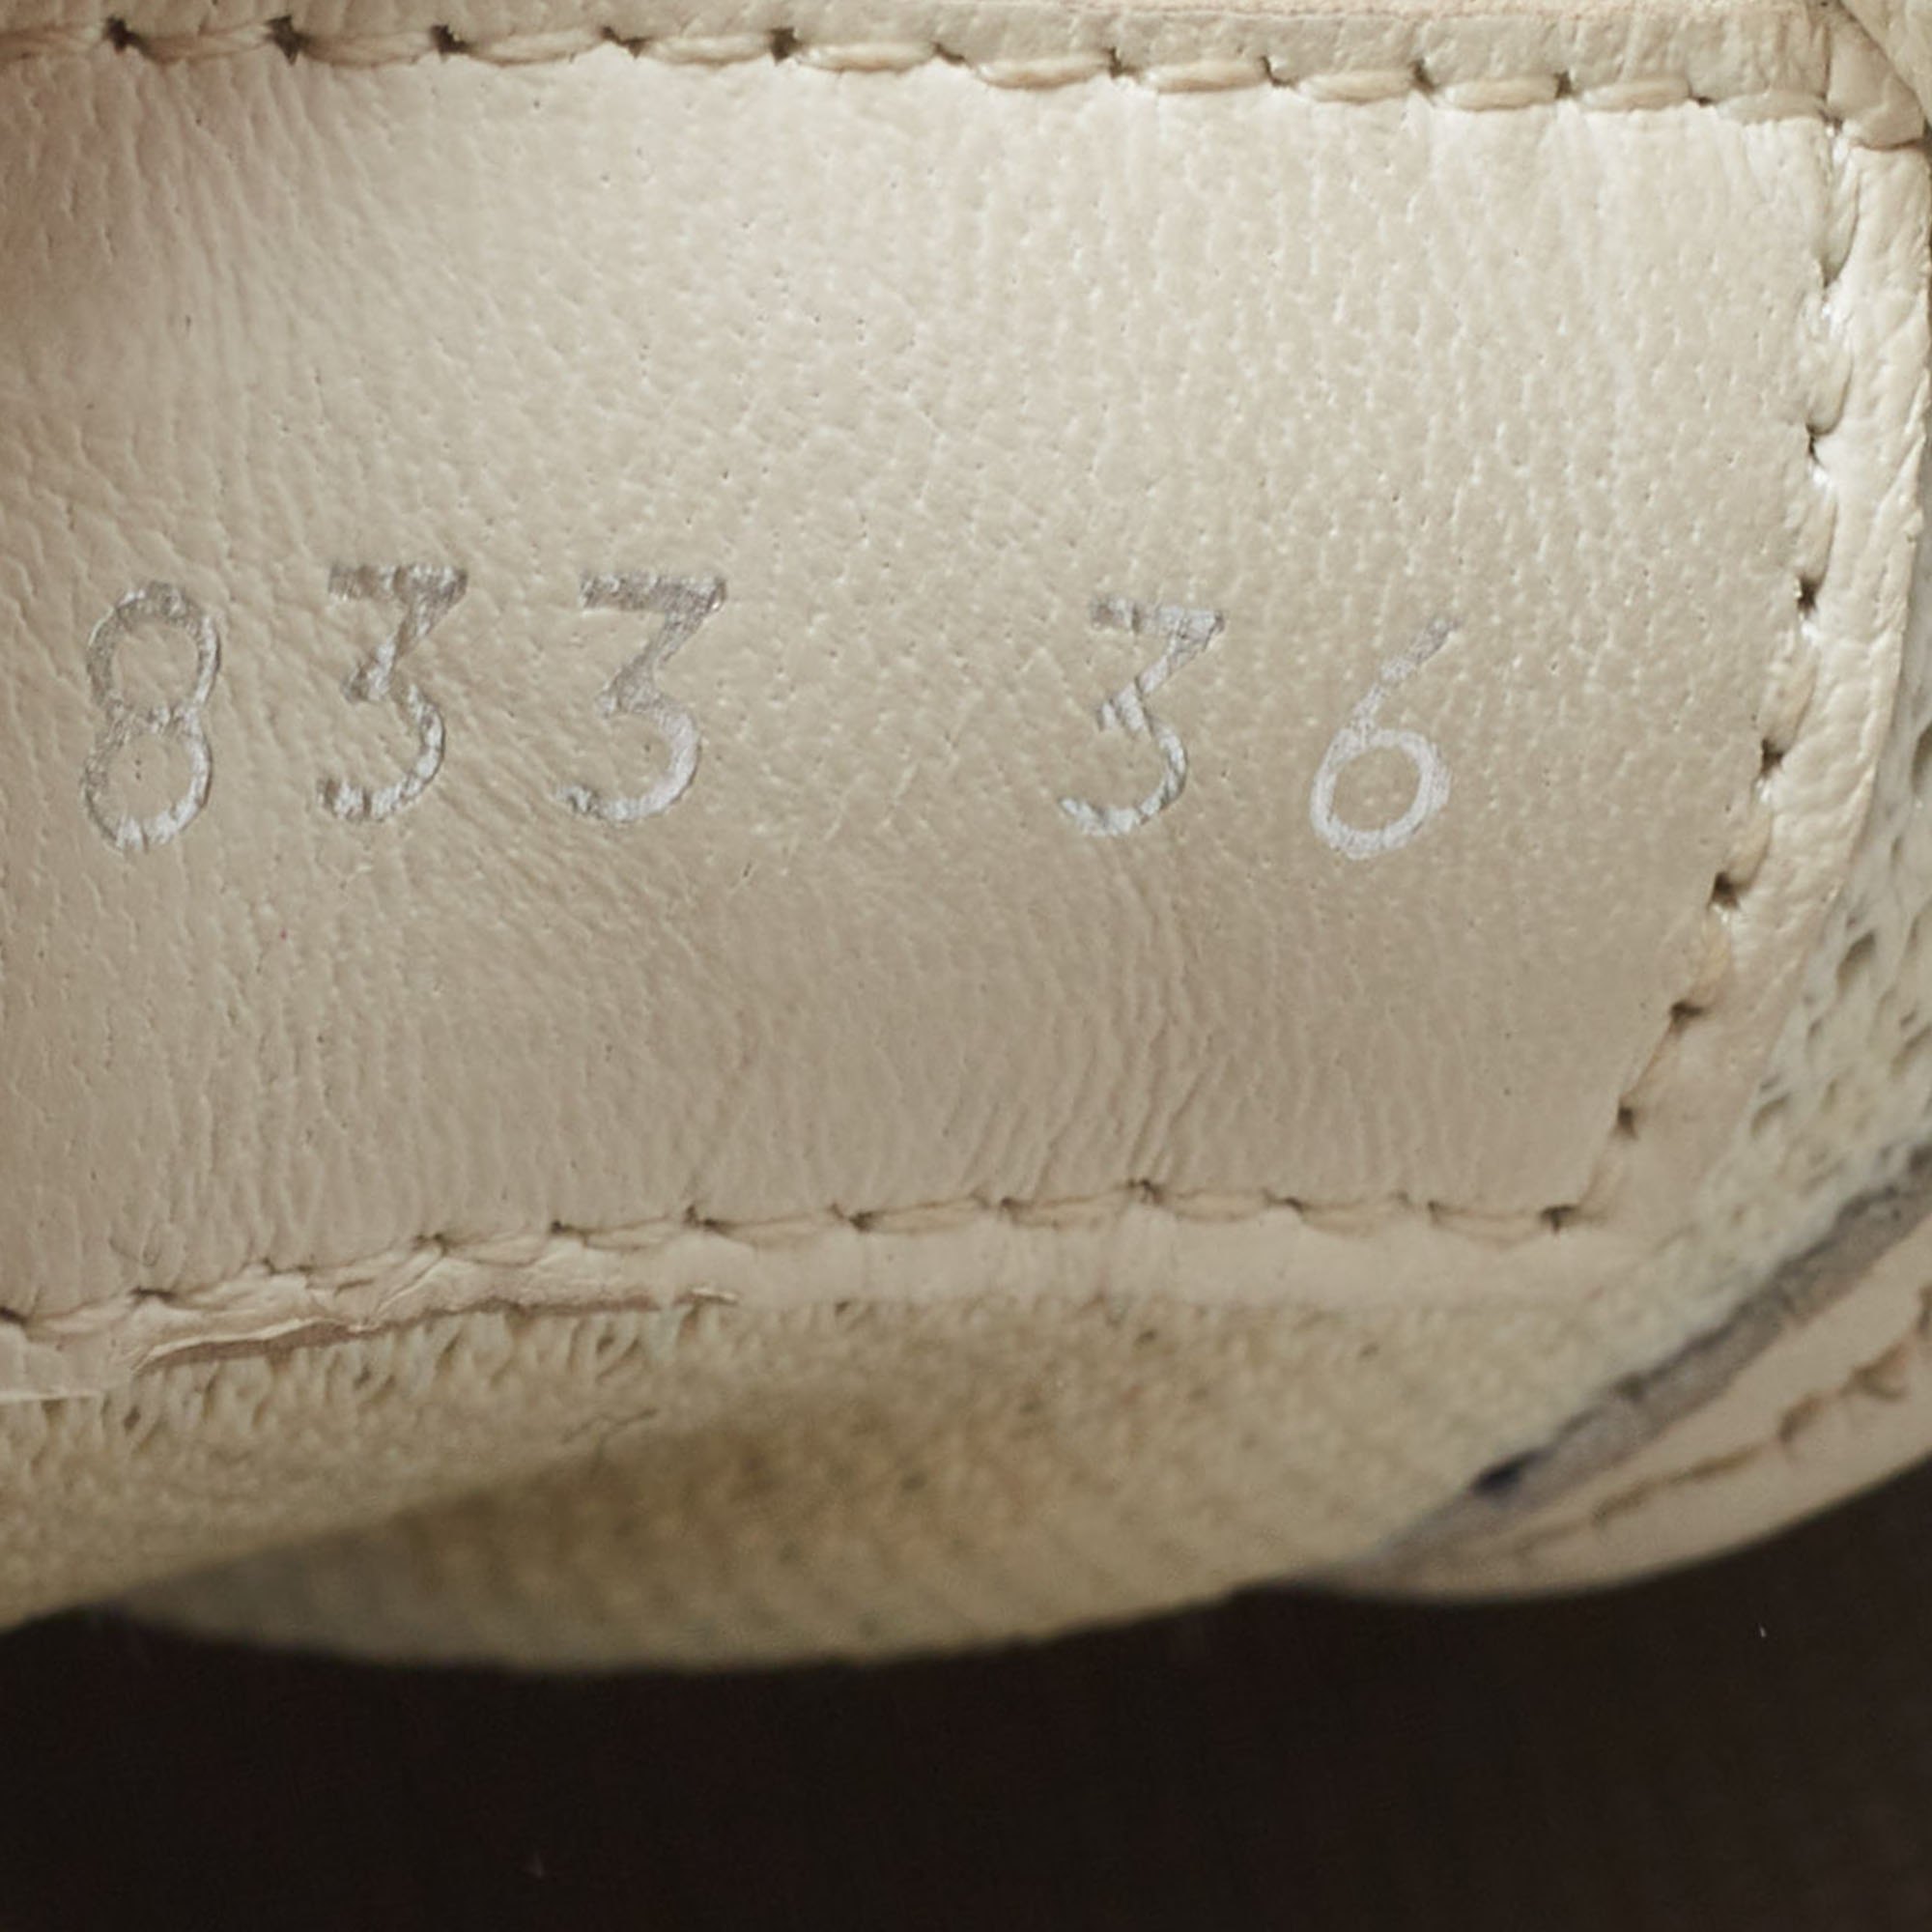 Fendi Cream Leather And Rubber Fendi-Fila Mania Logo Low Top Sneakers Size 36